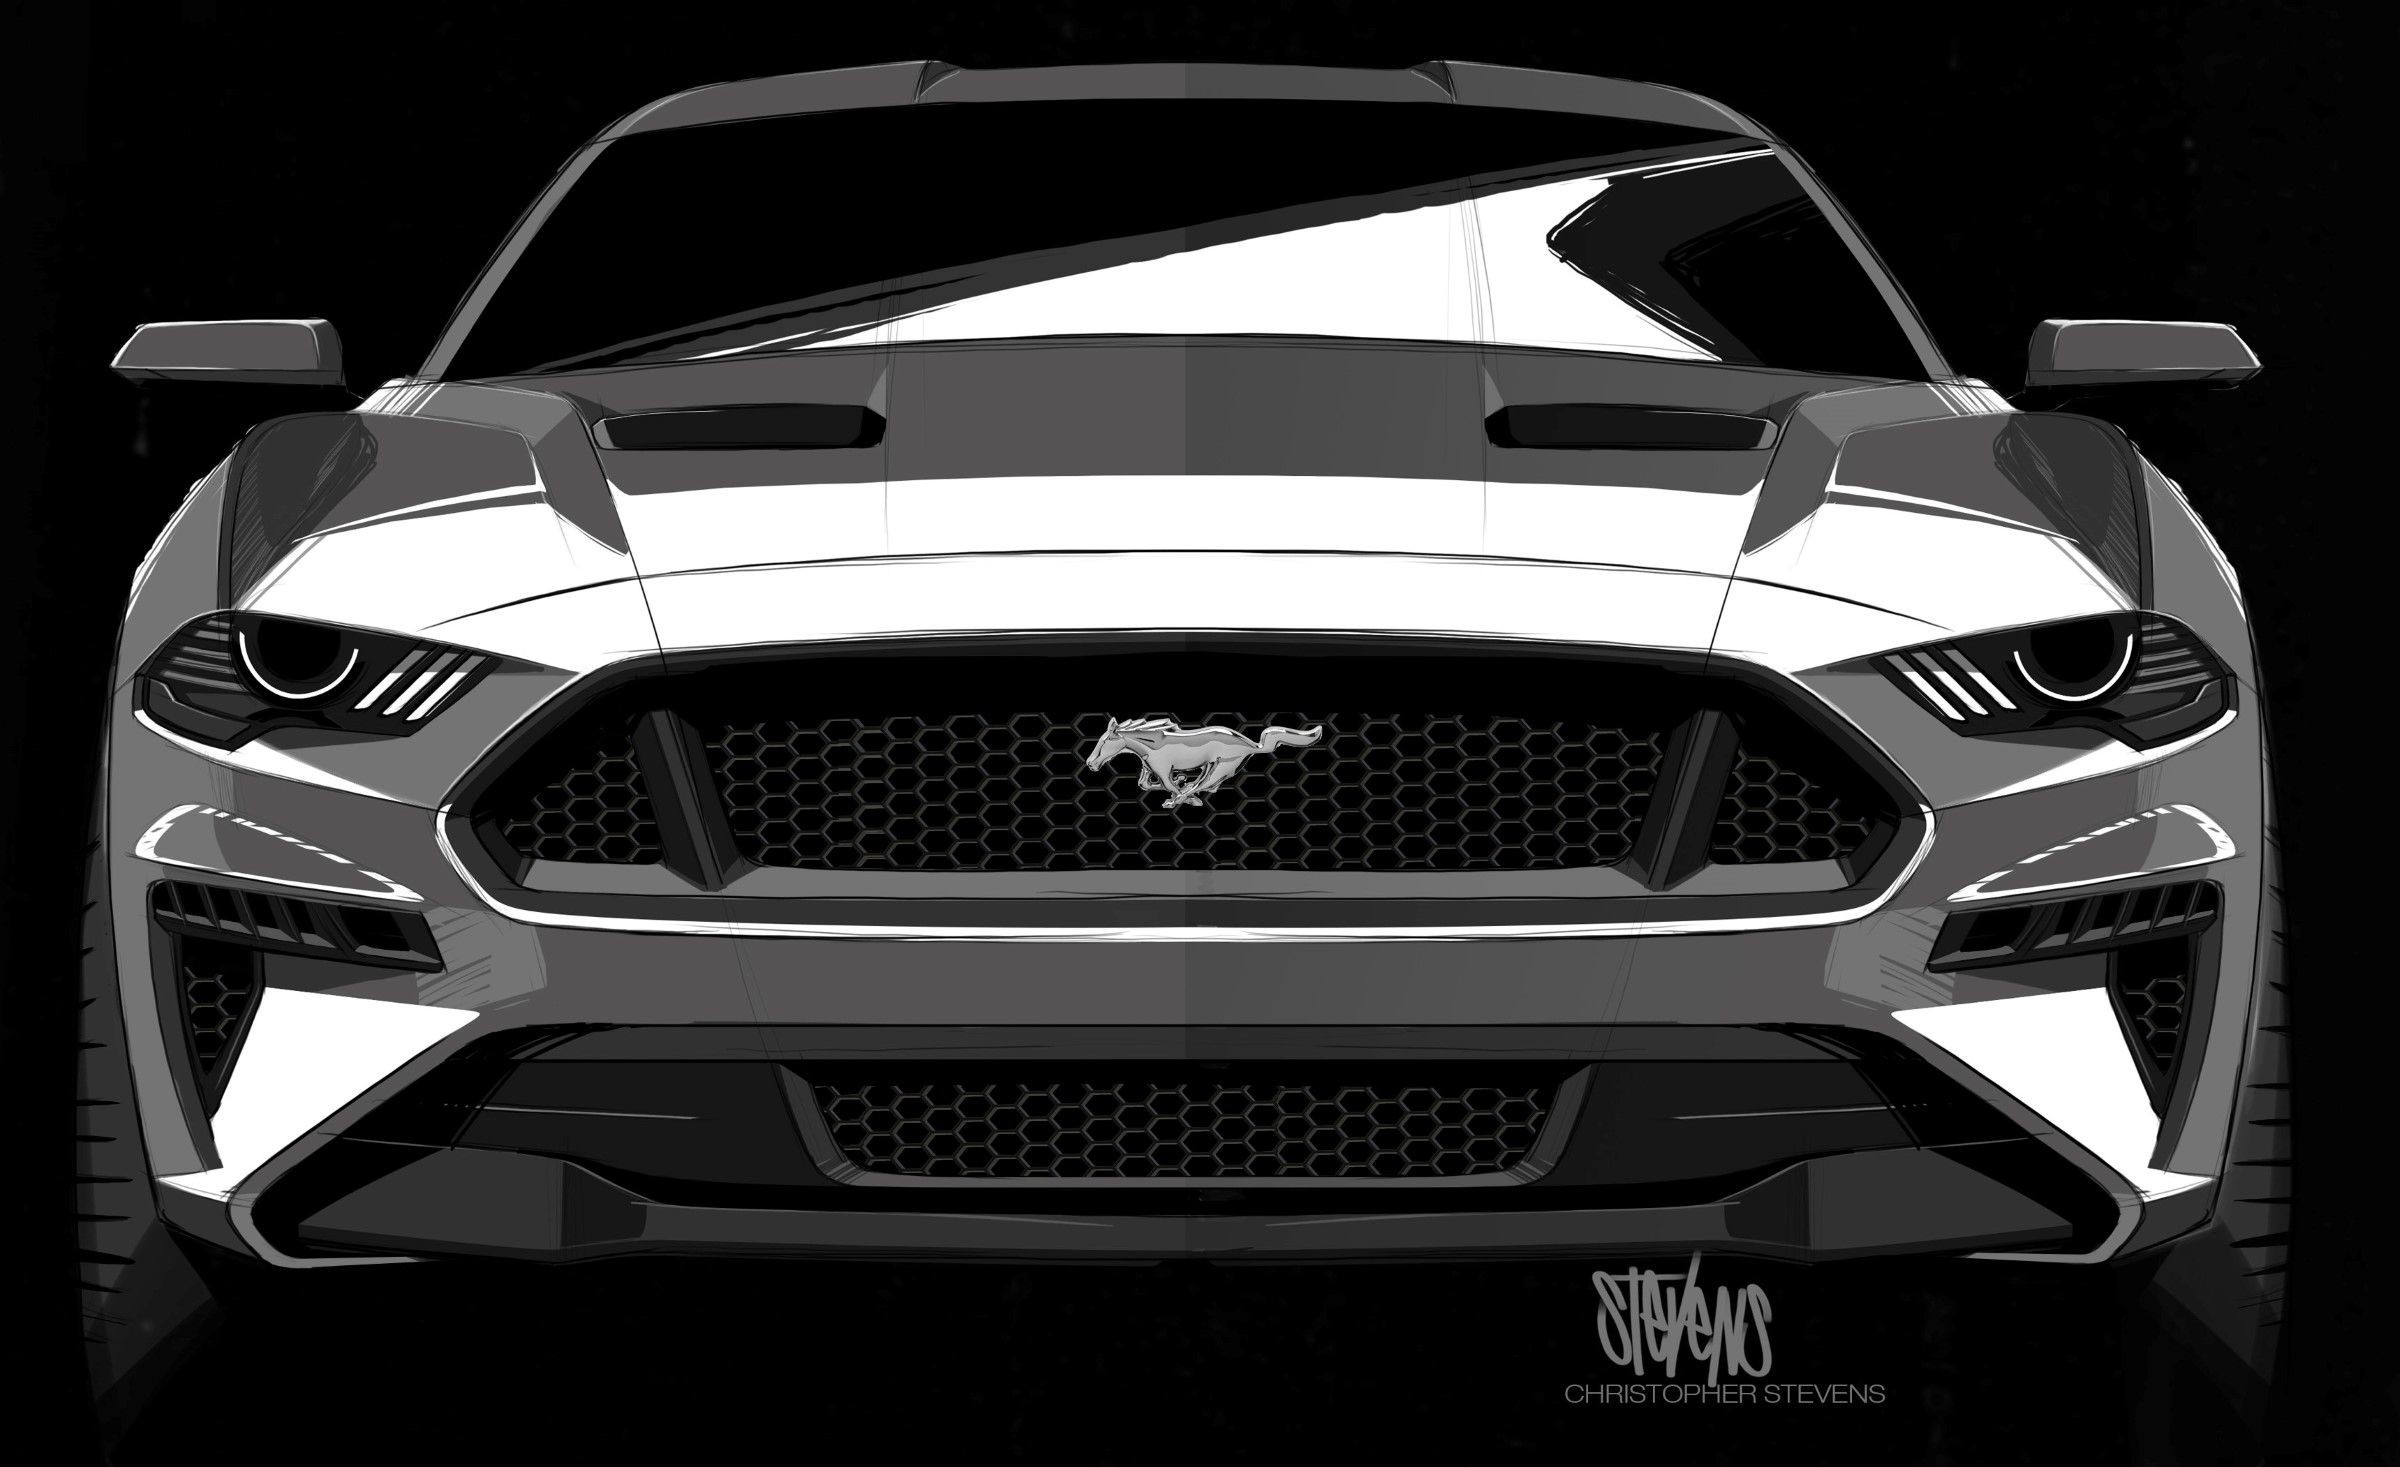 2018 Ford Mustang - Ford Mustang 2018 Darth Vader - HD Wallpaper 